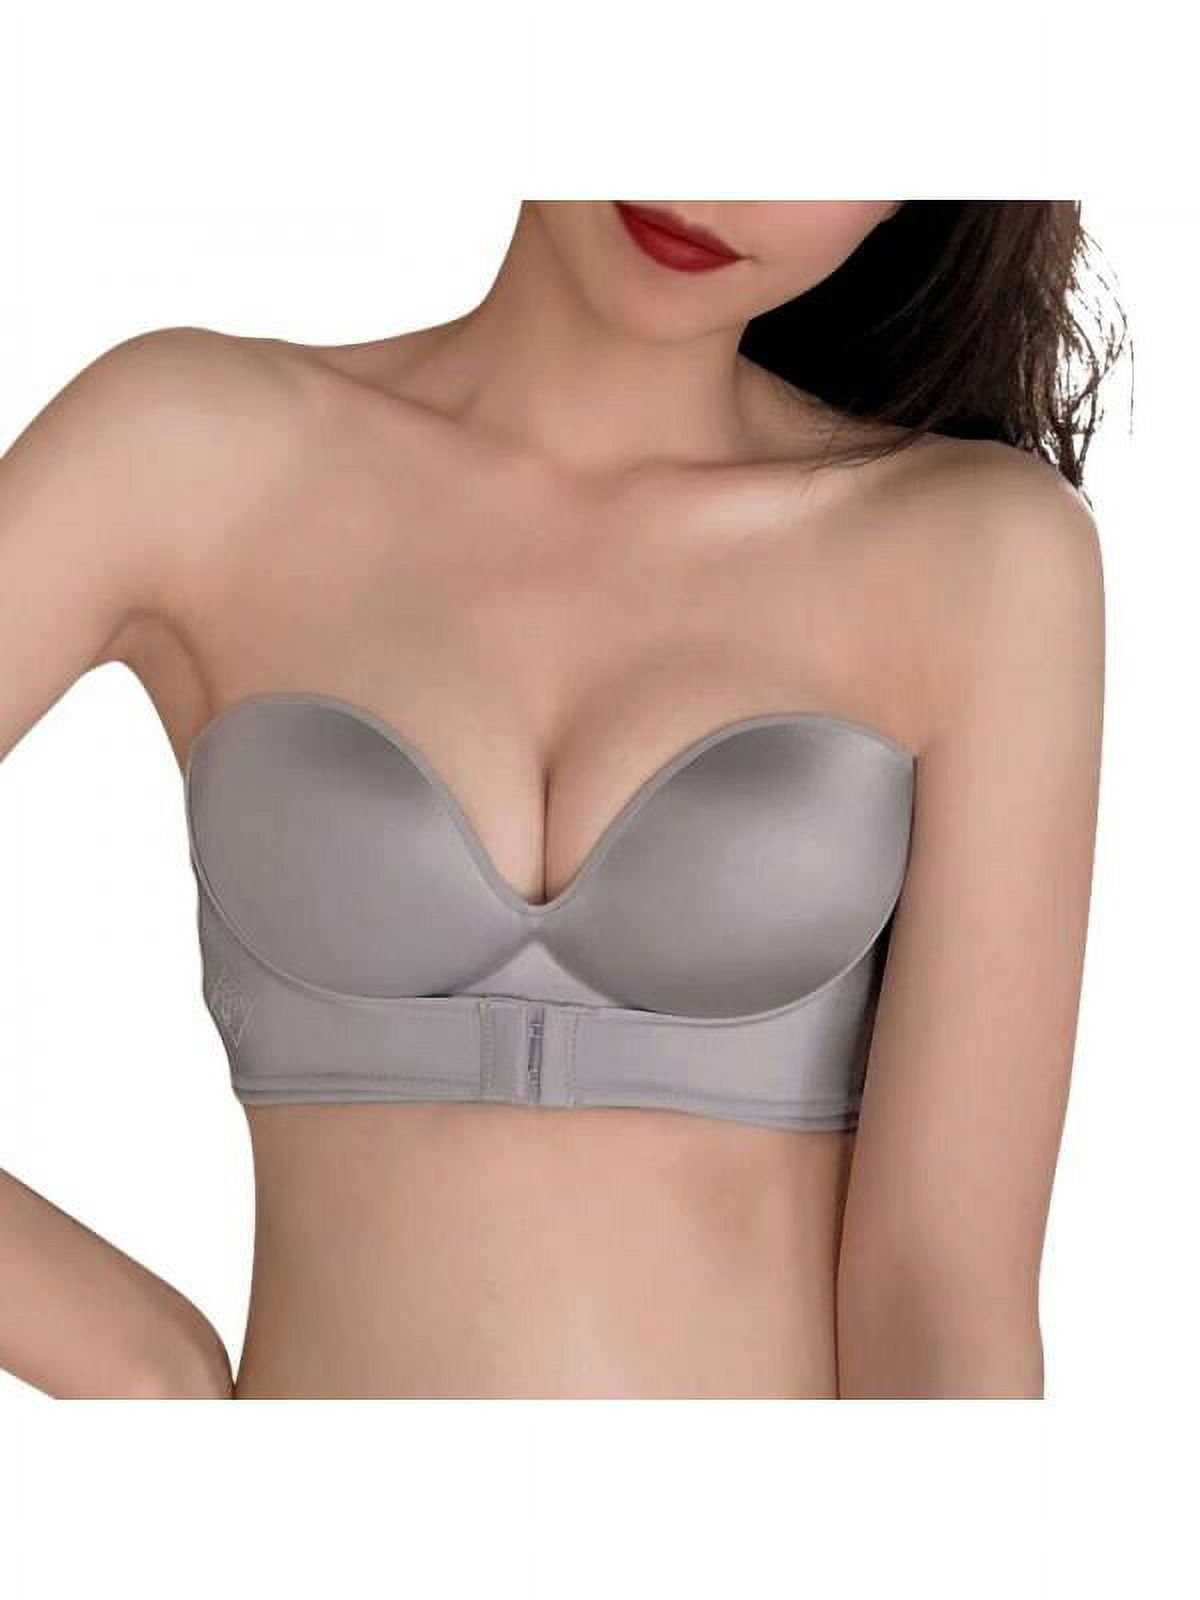 SAYFUT Women's Nipple Covers Self Adhesive Strapless Backless Bra